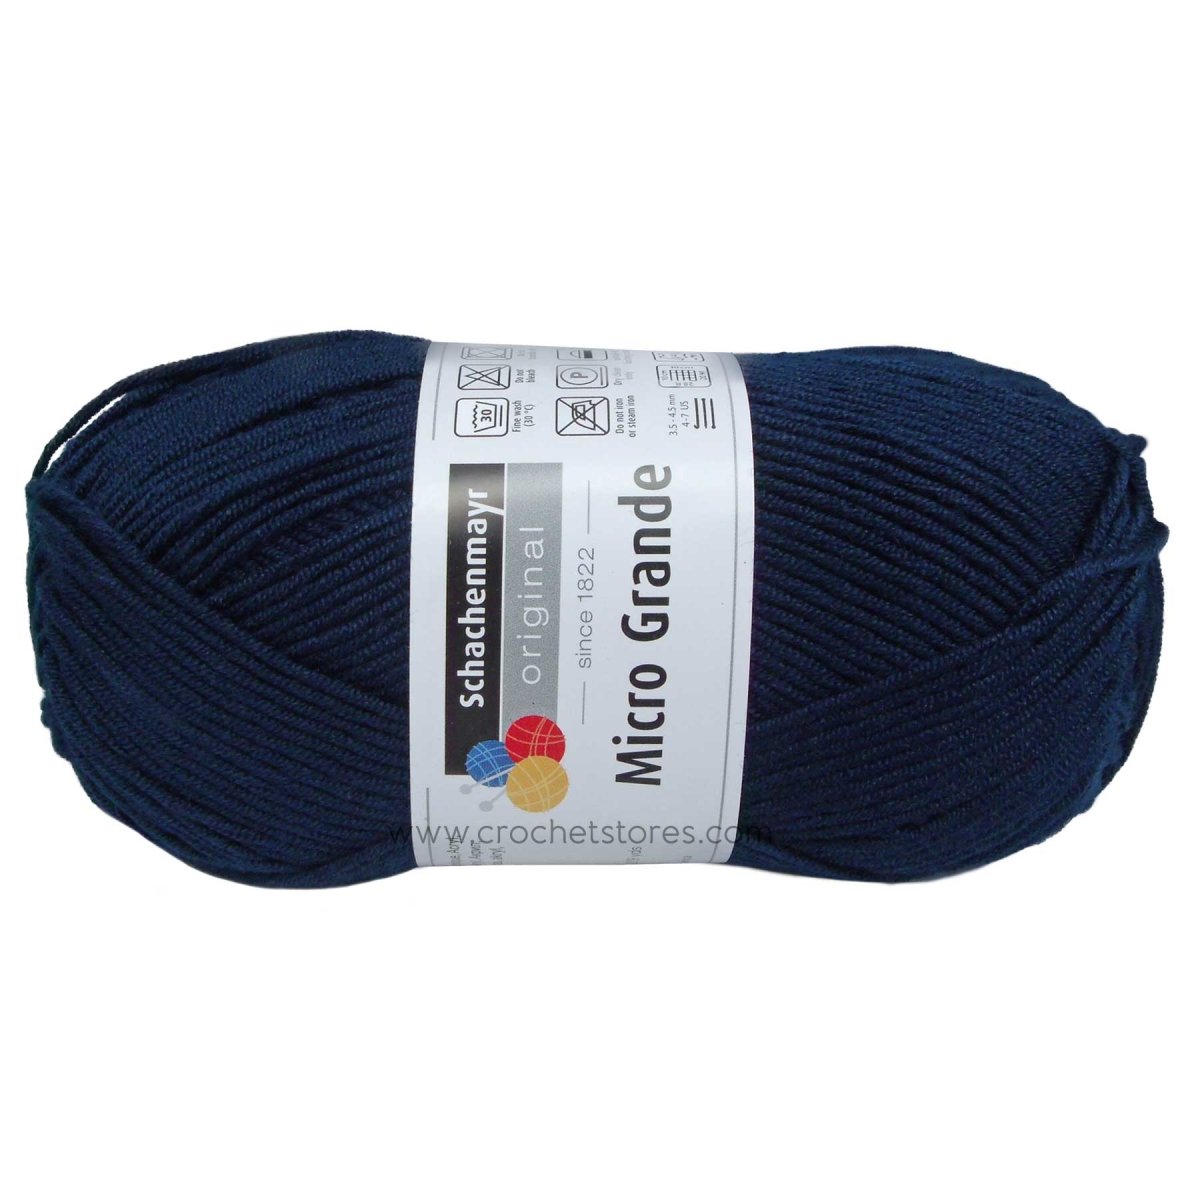 MICRO GRANDE - Crochetstores9807313-1684082700870998